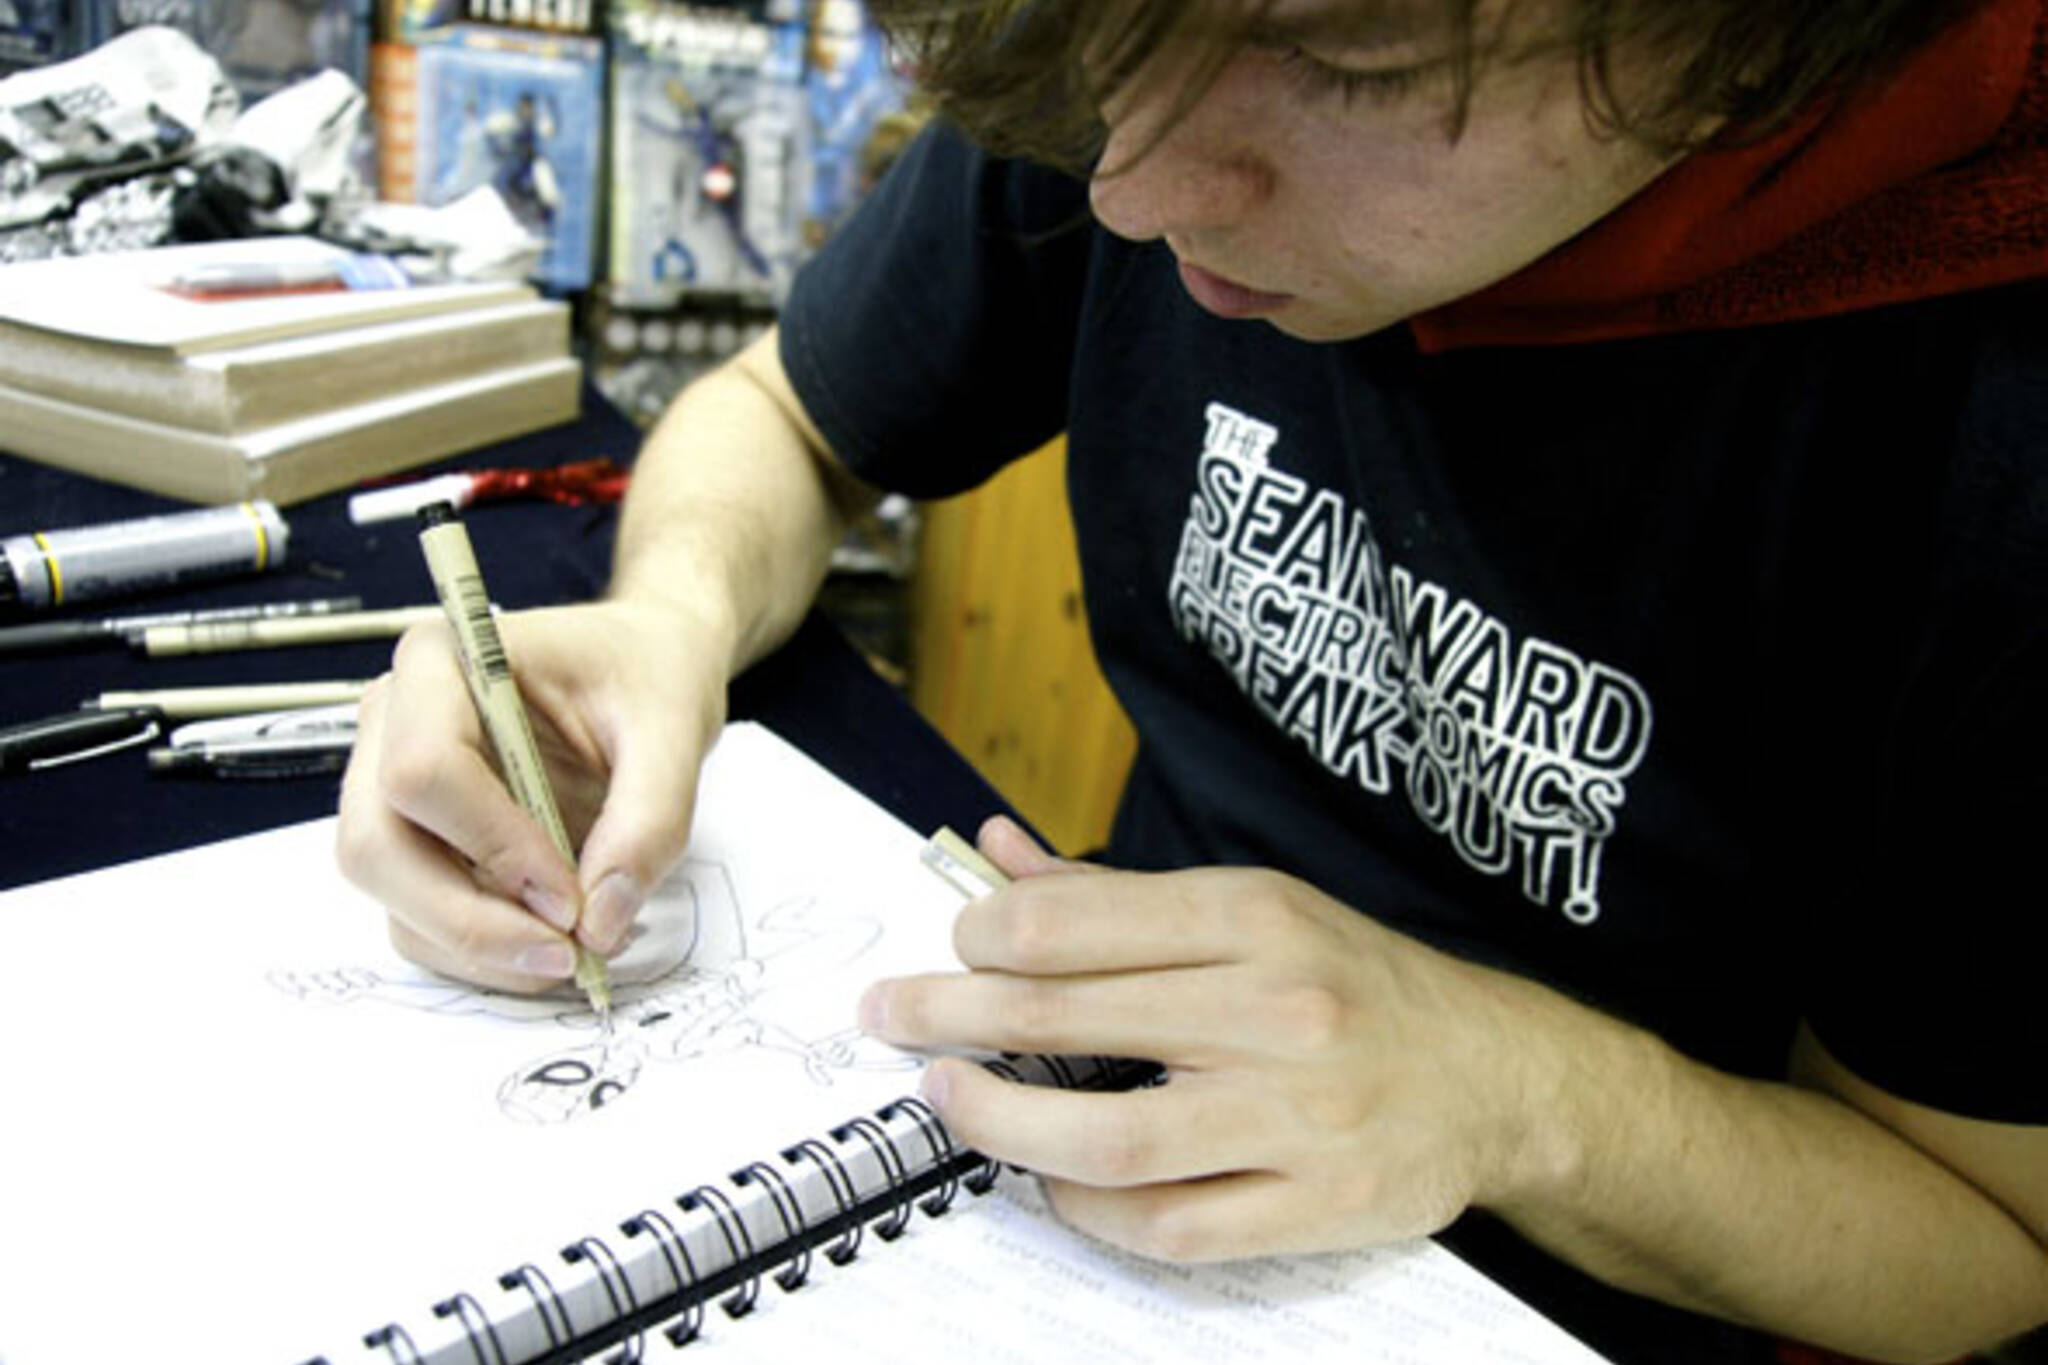 Sean Ward signs autographs at The Silver Snail